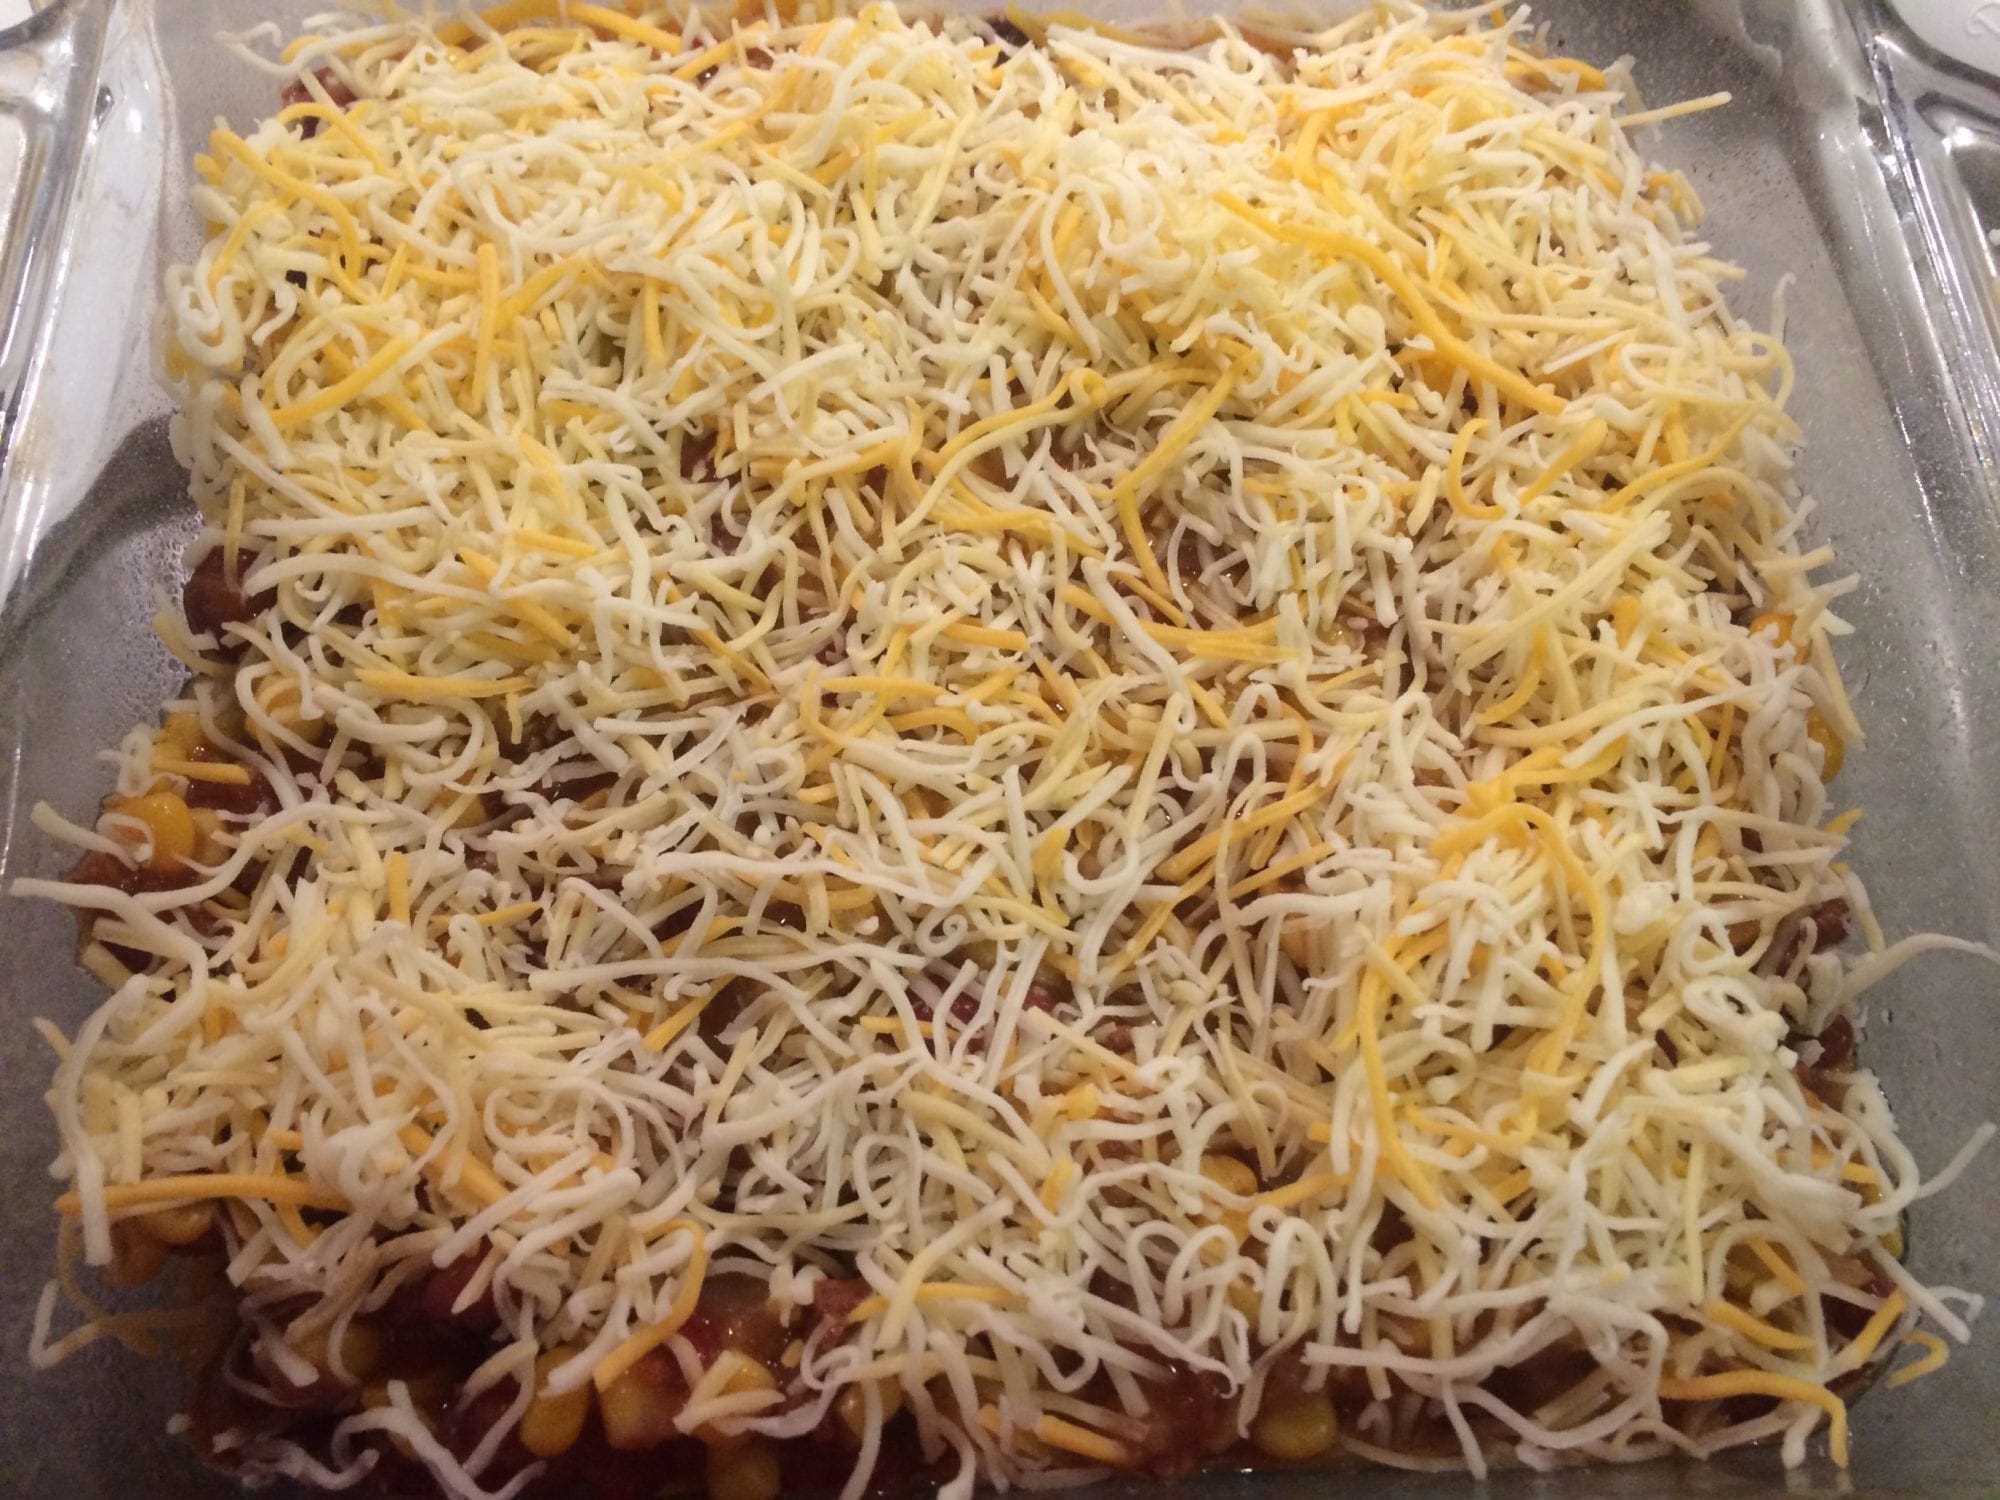 Sprinkle cheese on Mexican Chili Cornbread Casserole.